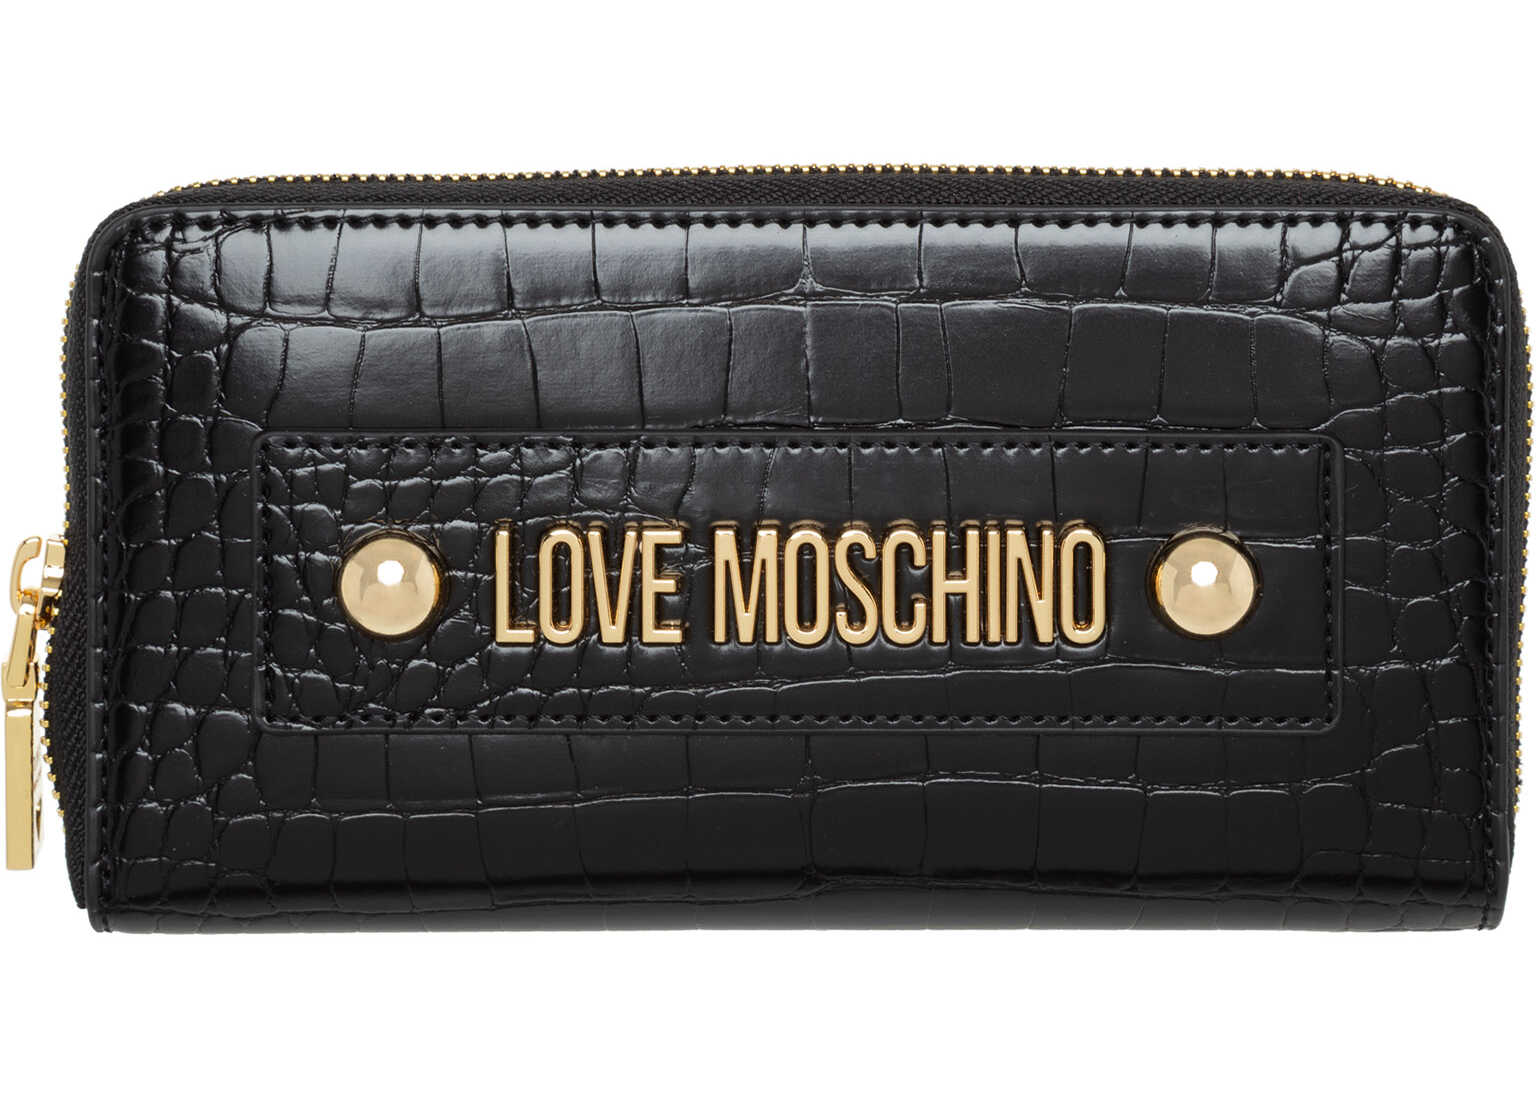 LOVE Moschino Wallet Black image0